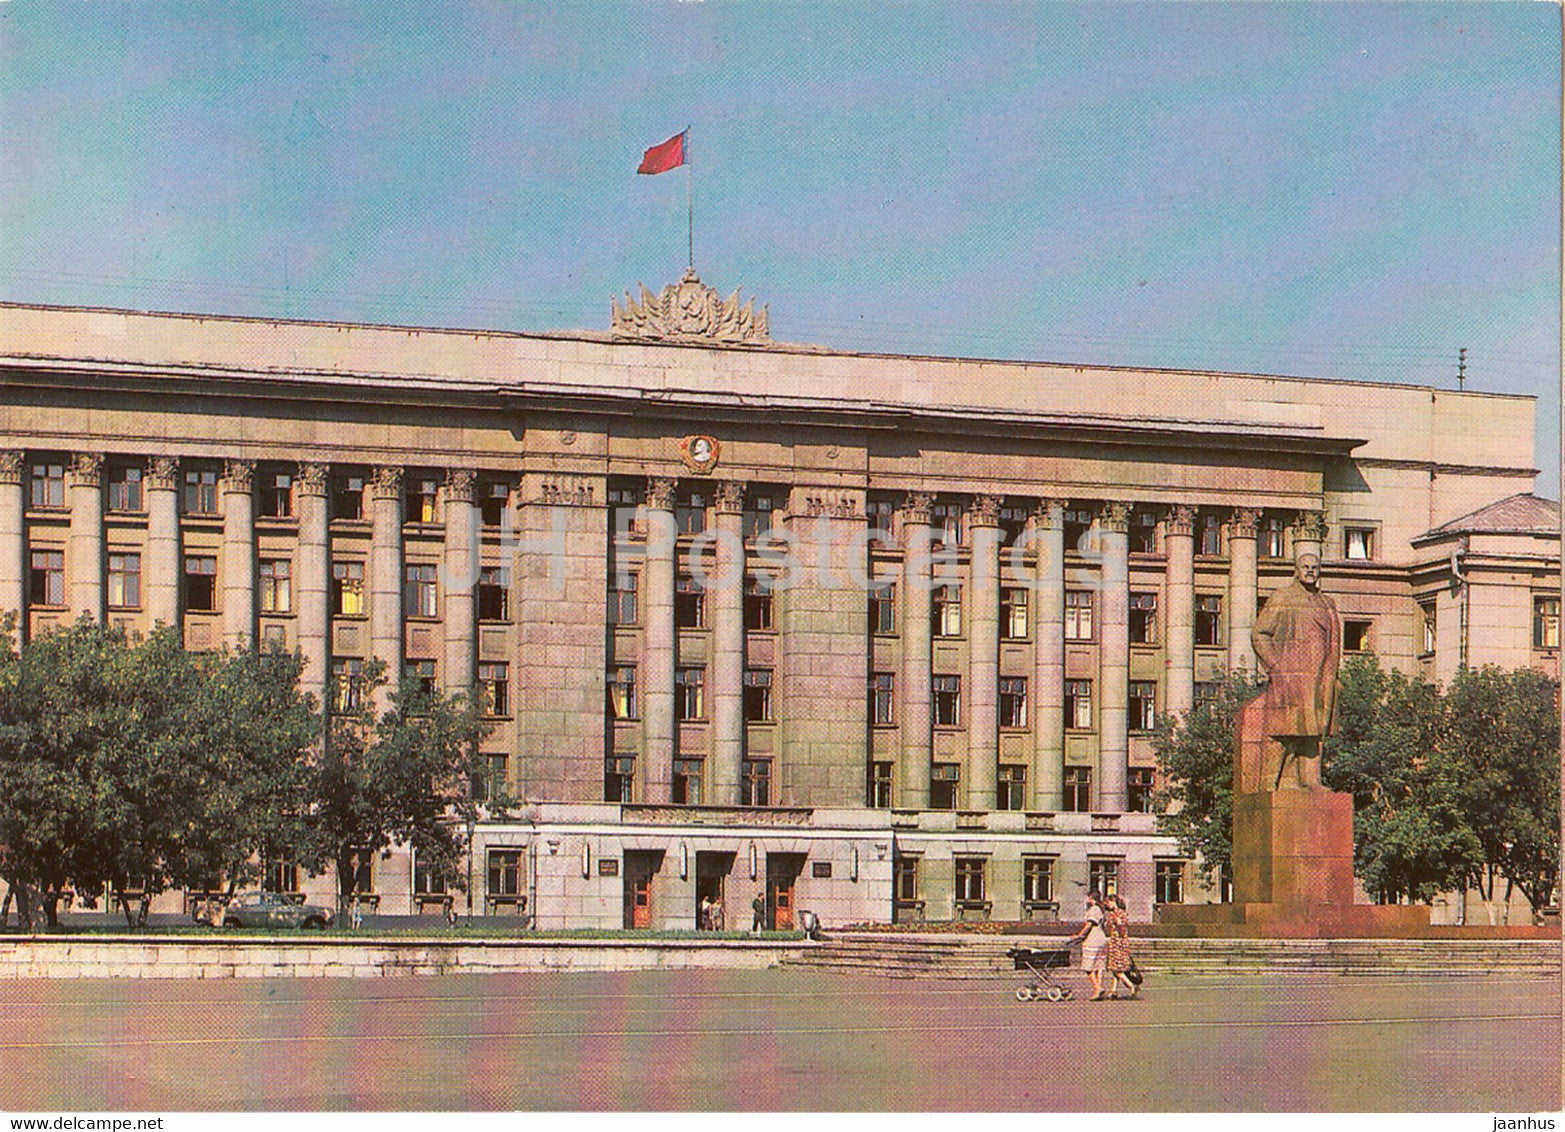 Kirov - Vyatka - House of Soviets - monument to Lenin - 1983 - Russia USSR - unused - JH Postcards